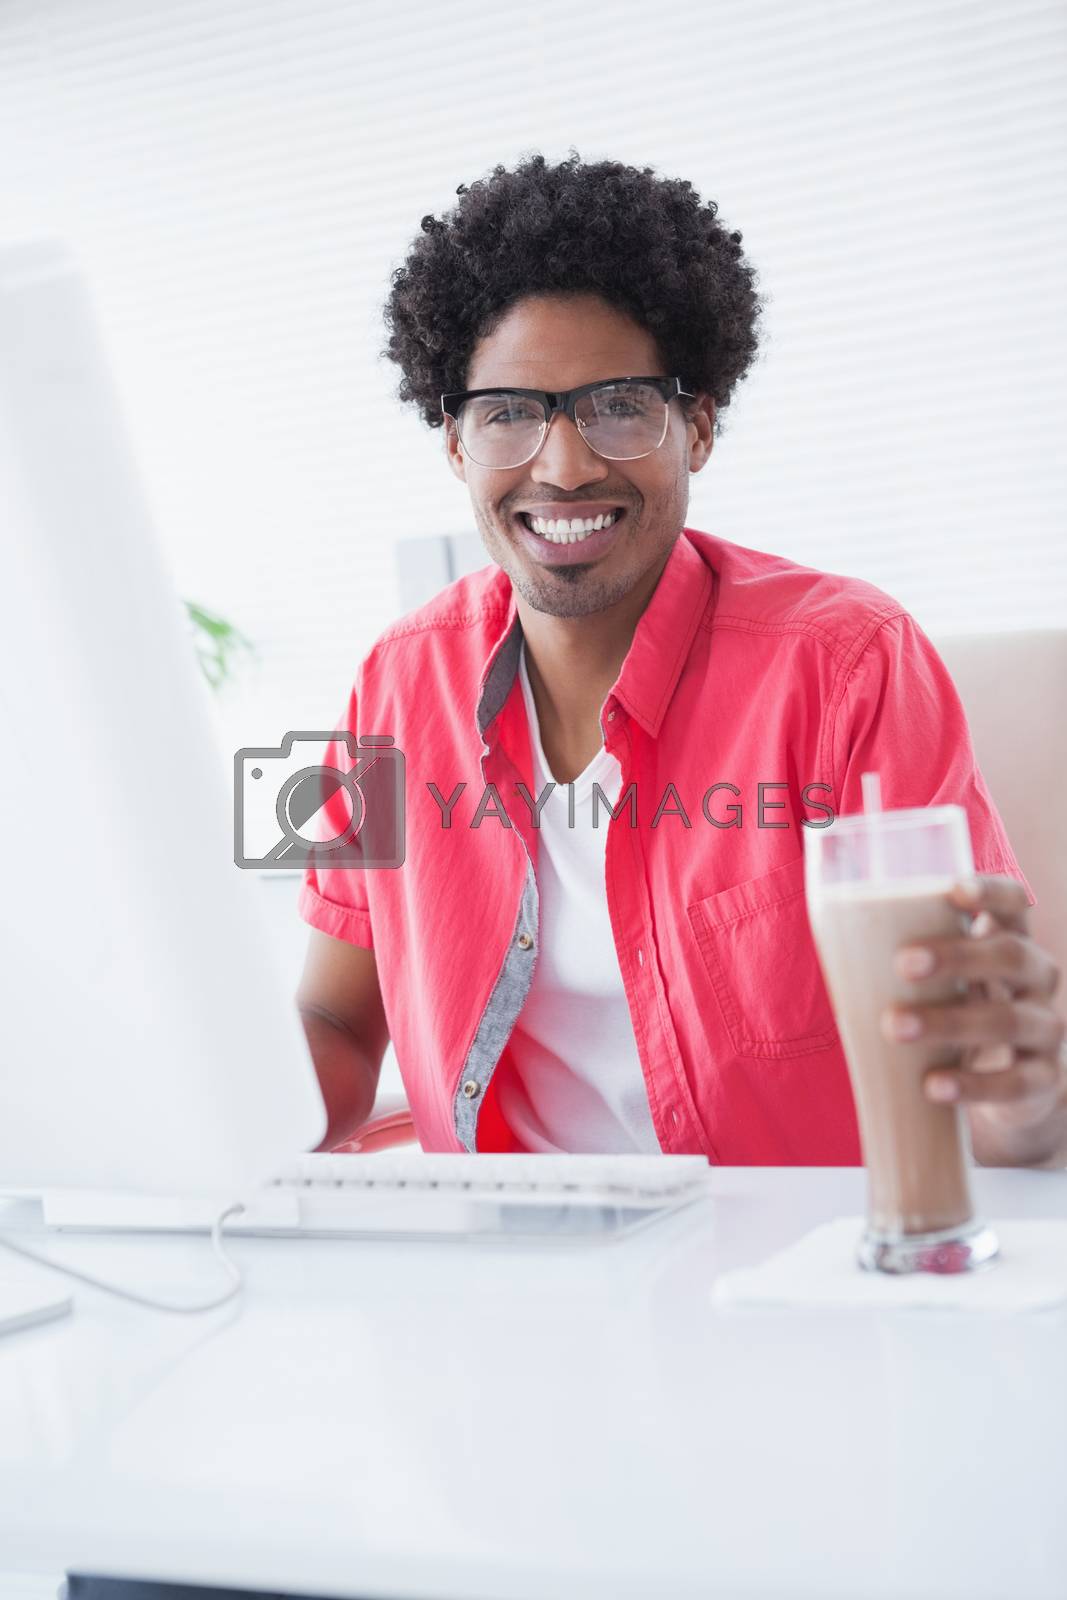 Royalty free image of Smiling casual businessman holding glass of milkshake by Wavebreakmedia